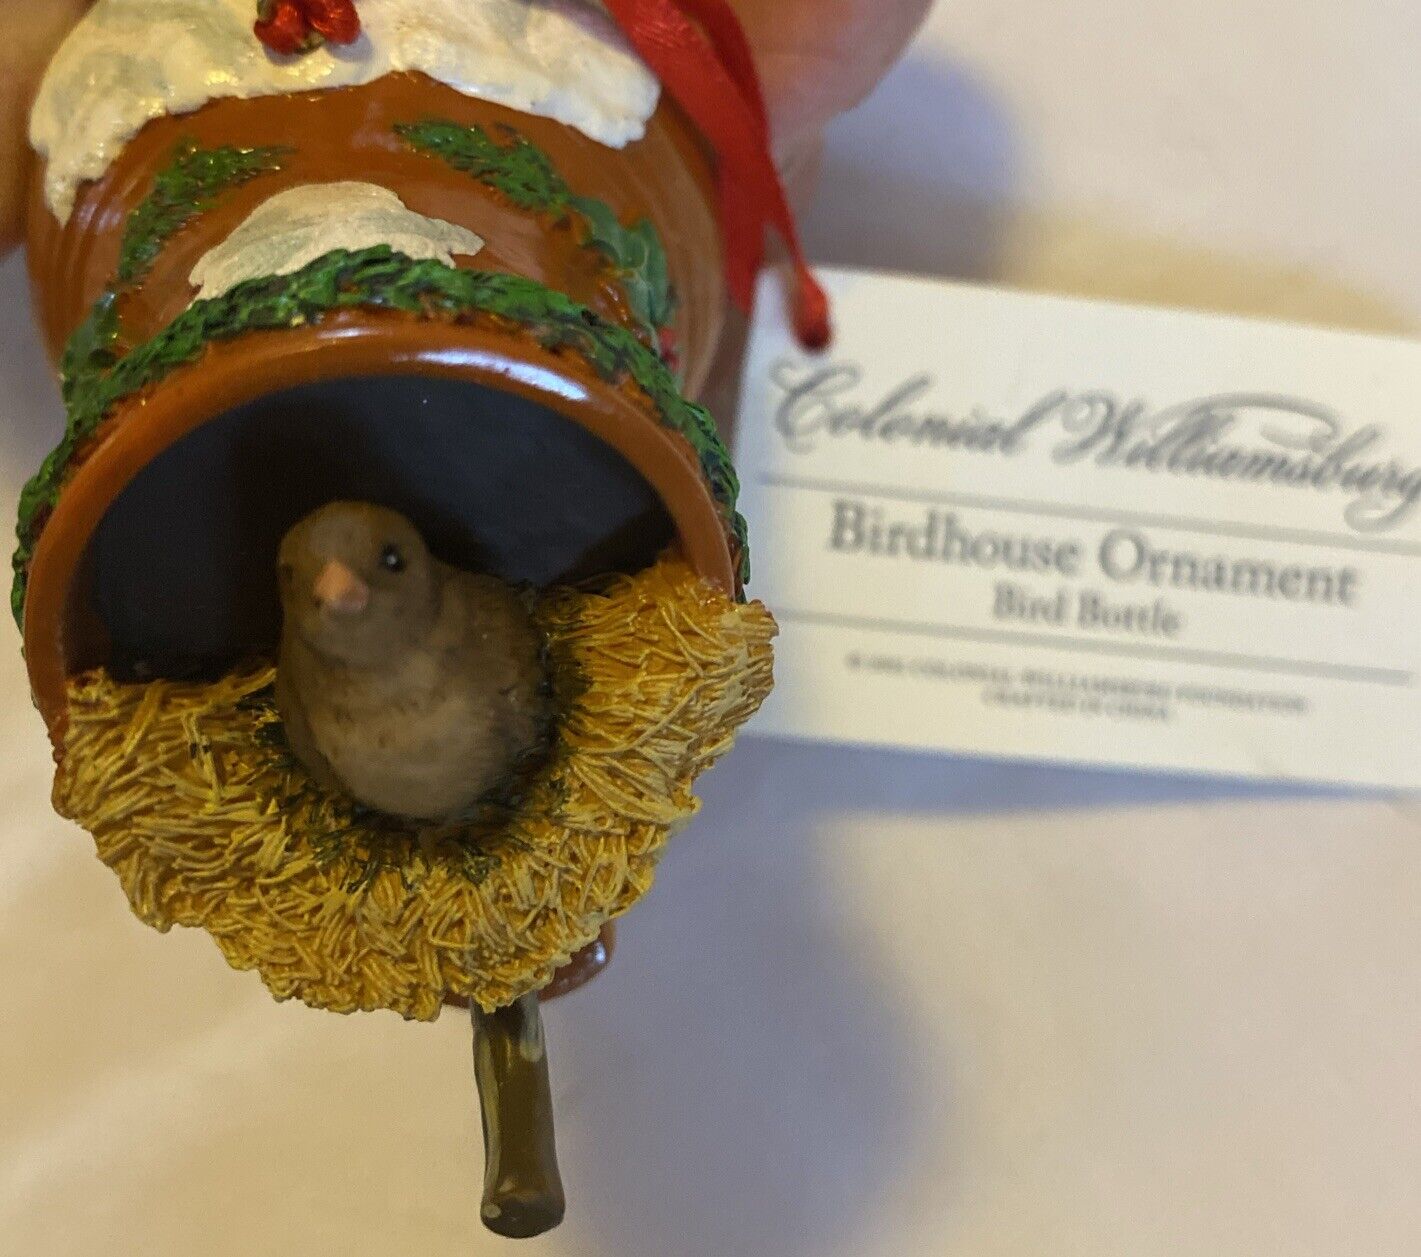 2001 Colonial Williamsburg Birdhouse Ornament Bird Bottle RARE & HTF W/Tag